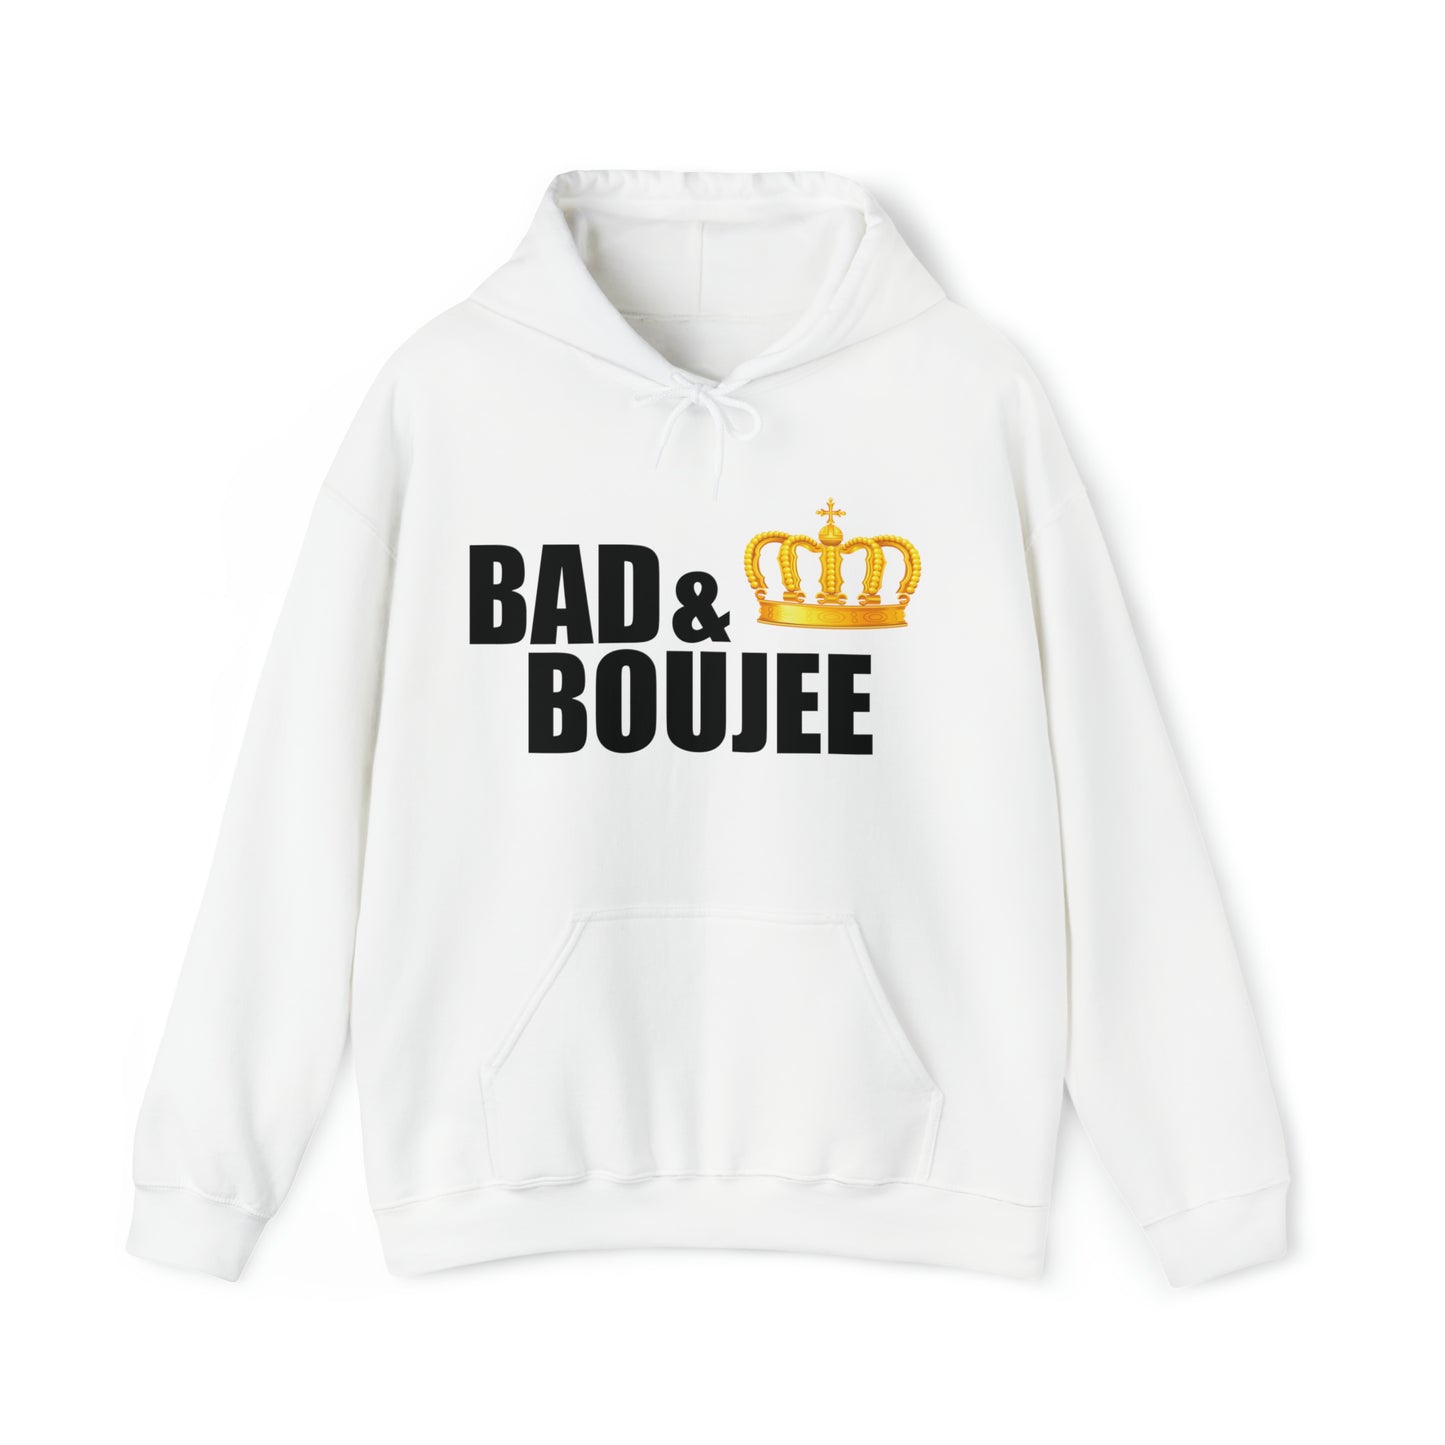 Bad & Boujee Hooded Sweatshirt